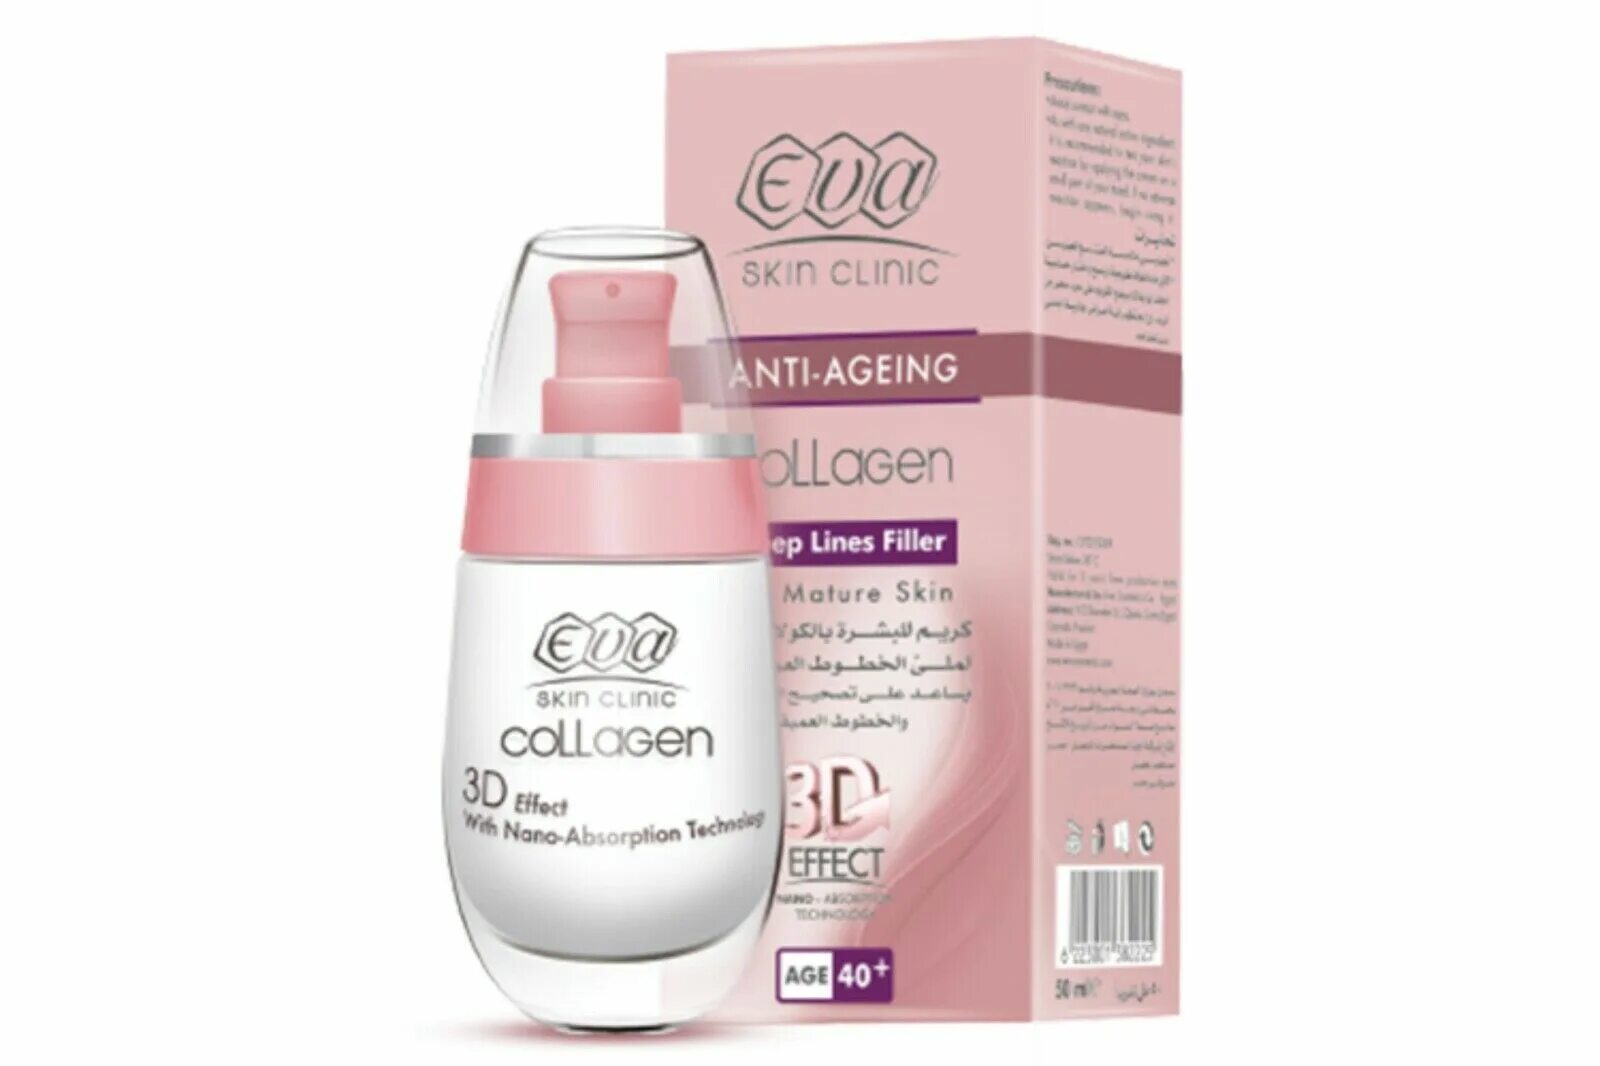 Косметика Eva Skin Clinic. Файн лайн филлер. Eva Skin Clinic Anti Aging Collagen.